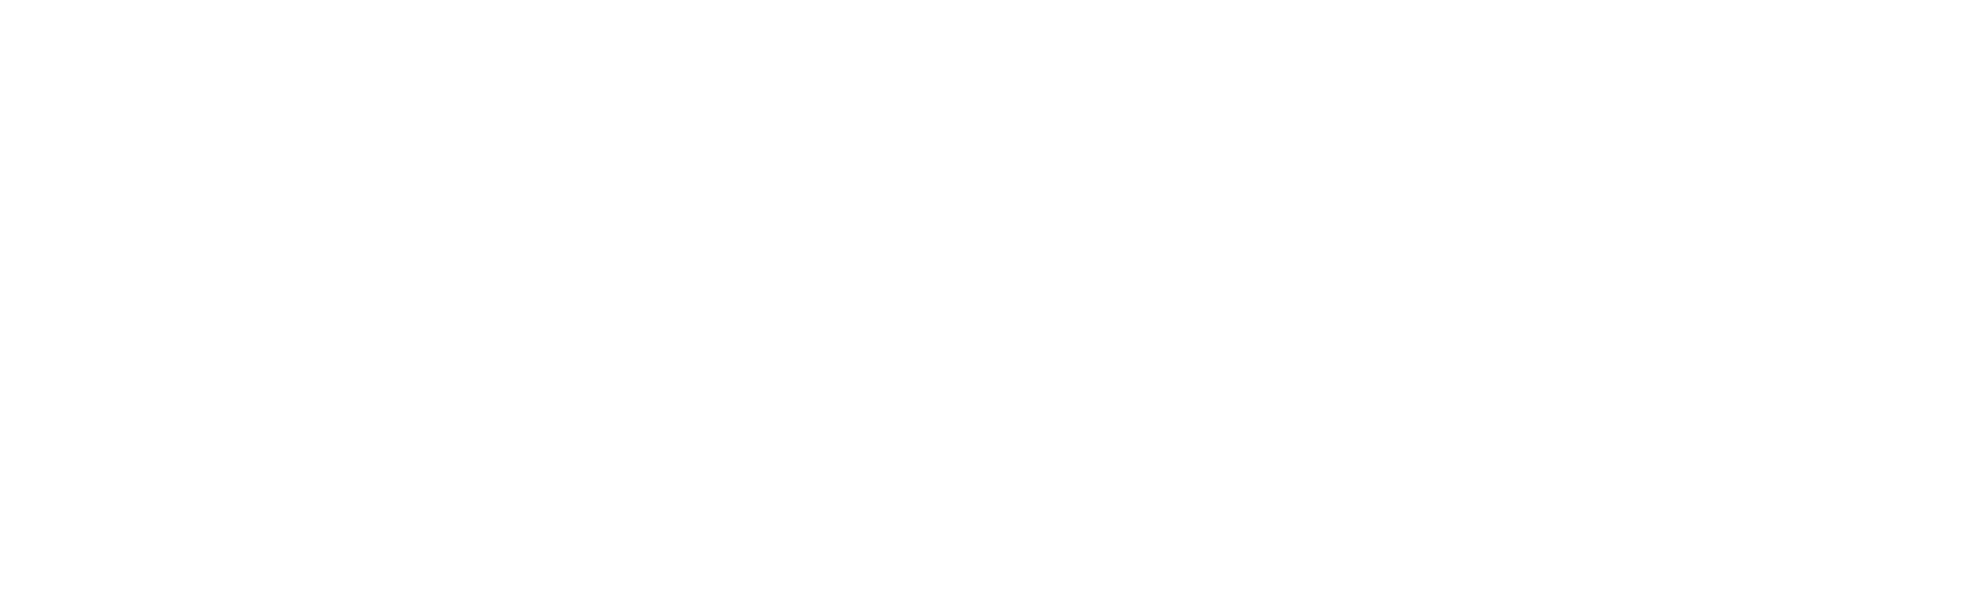 VOLfest - logo blanco